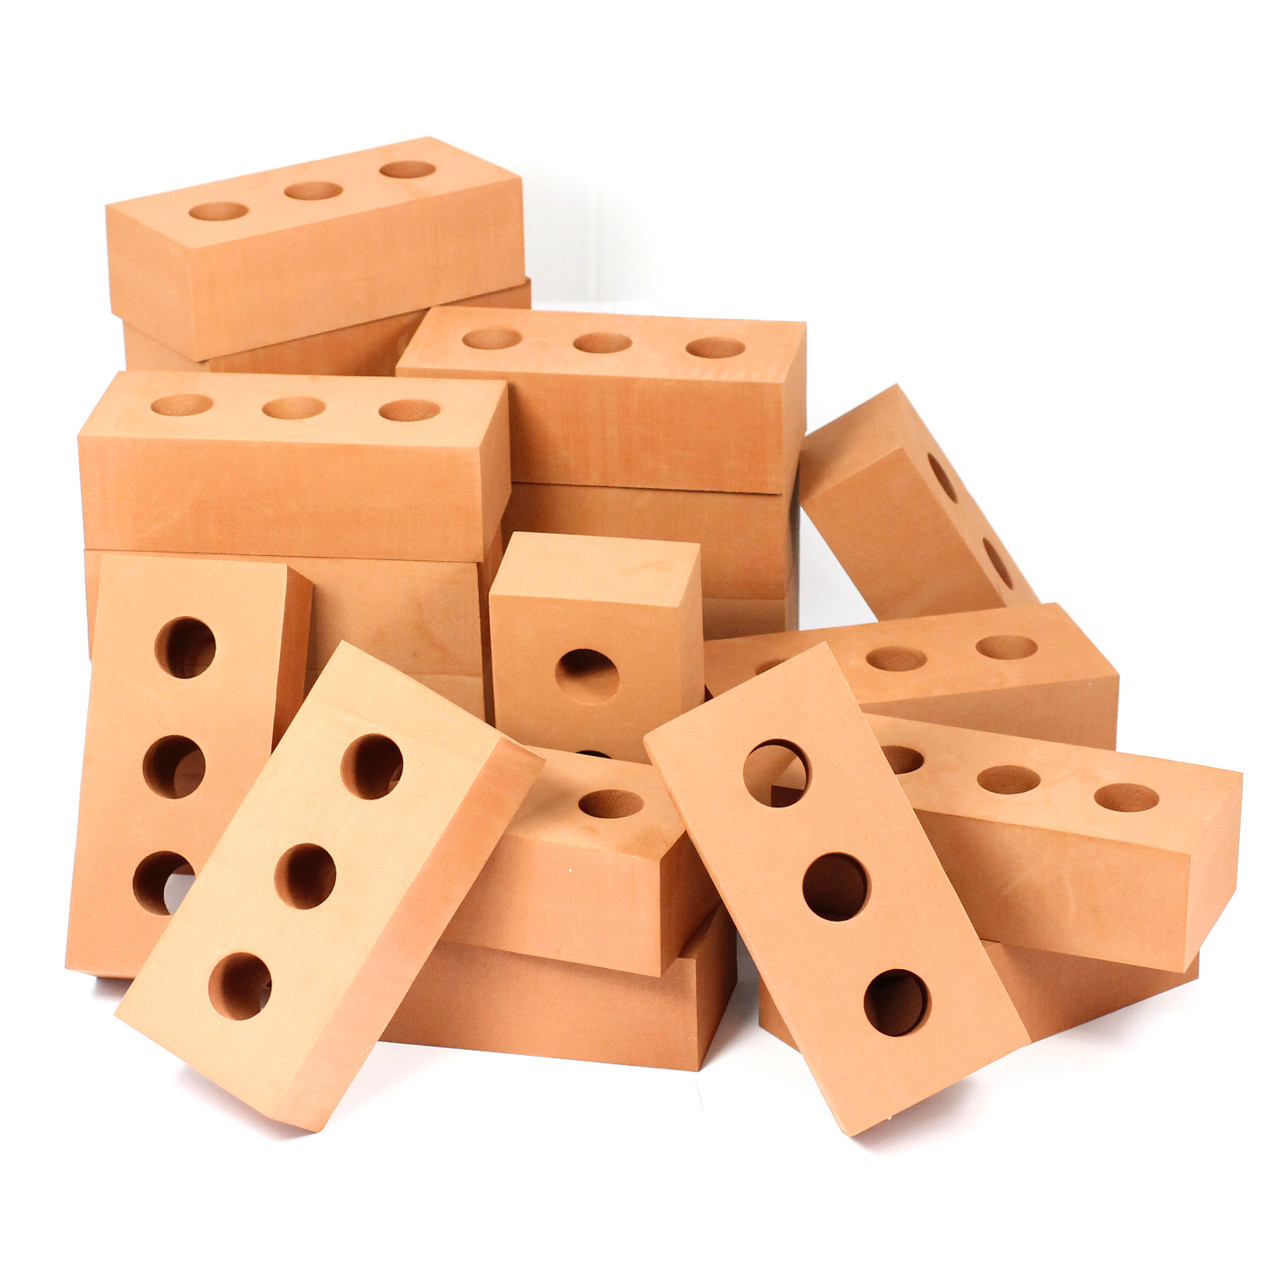 Buy Foam Brick Building Block Set - Actual Brick Size, for